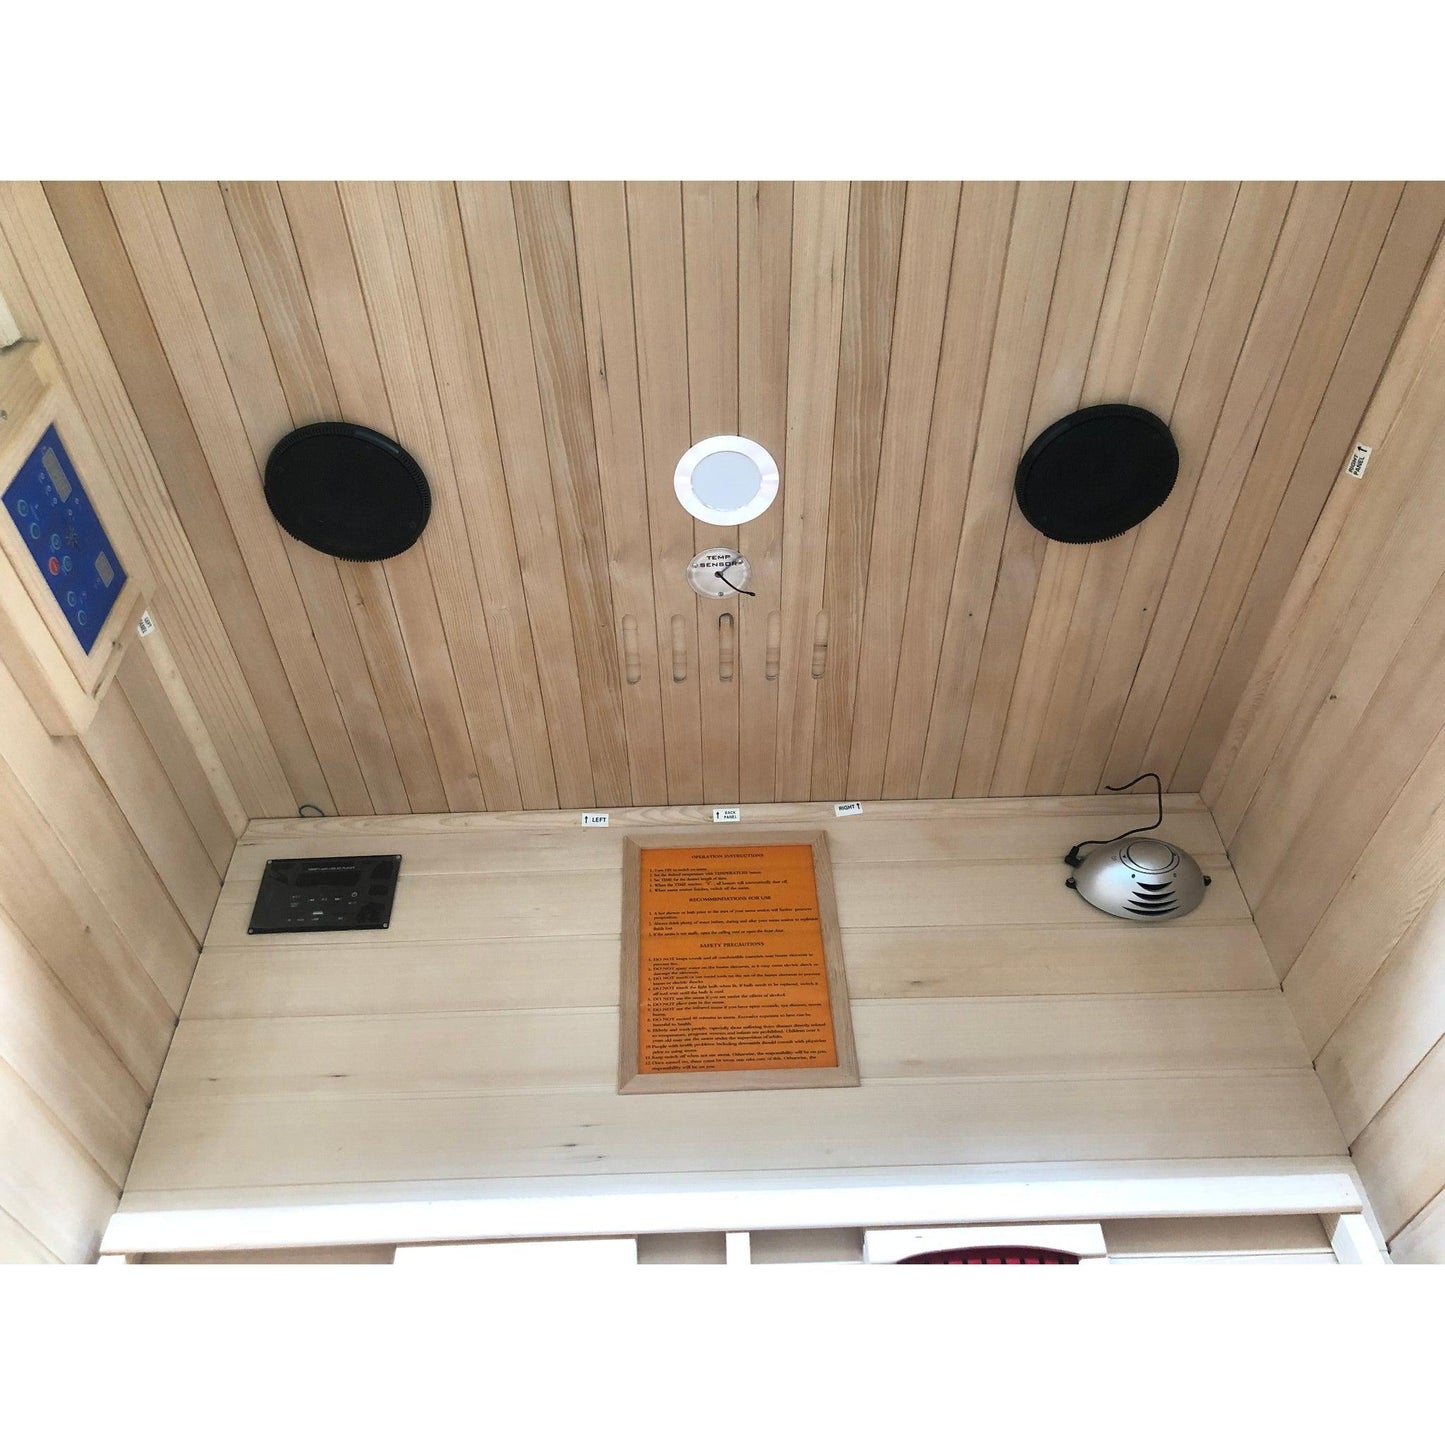 SunRay Burlington 2-Person Outdoor Infrared Sauna In Hemlock Wood With Ceramic Heaters